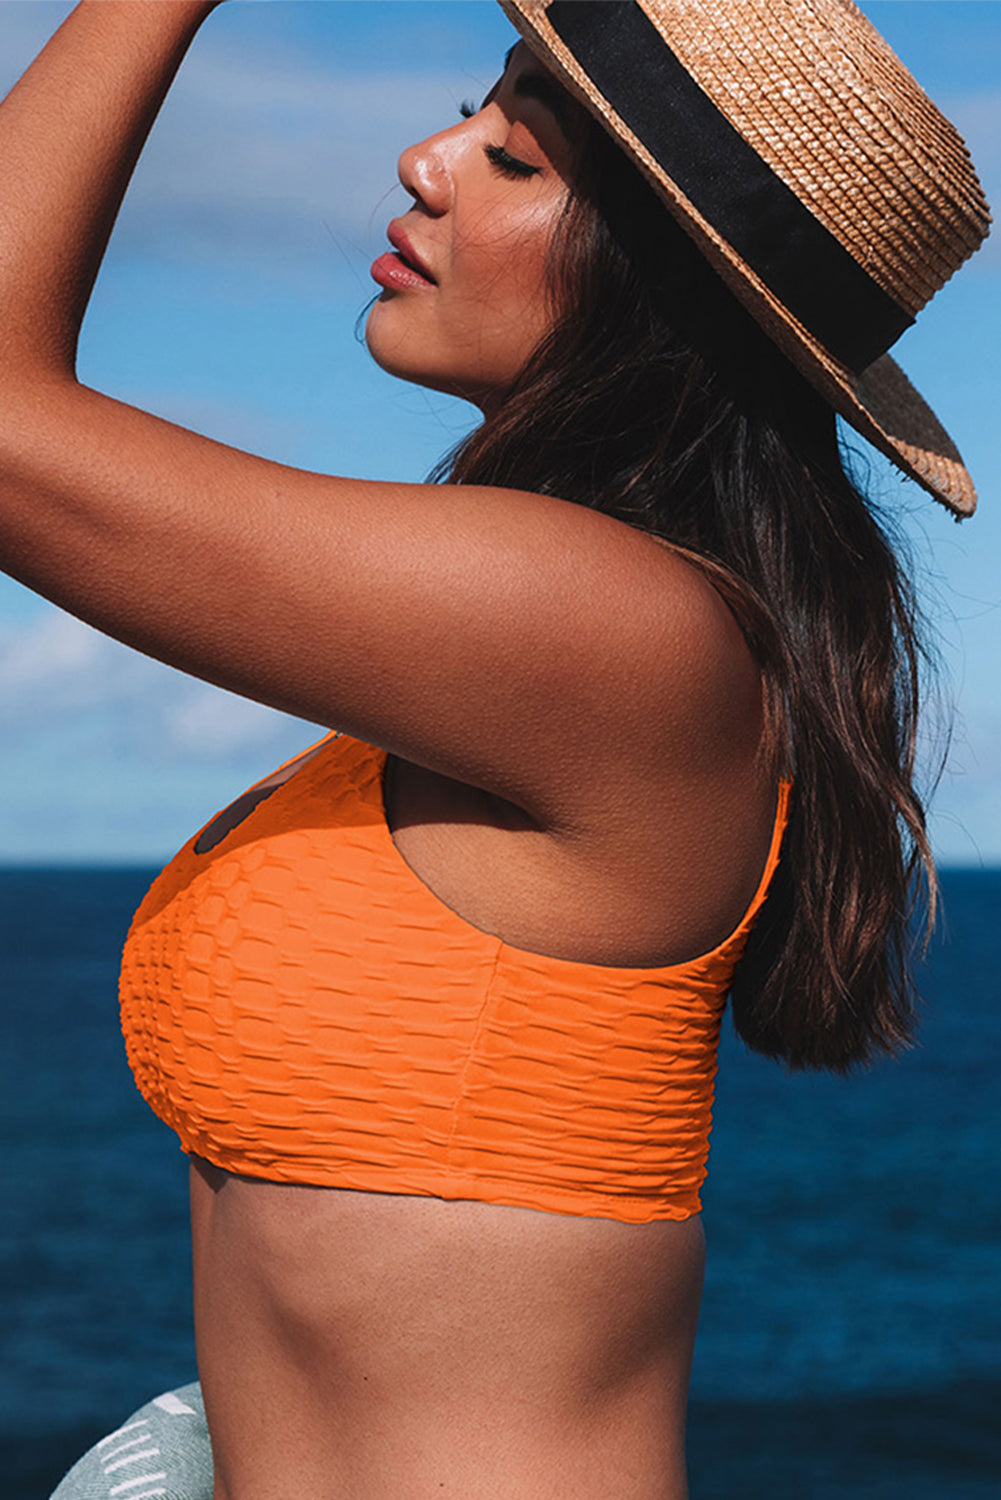 Orange Honeycomb Textured Bikini Top